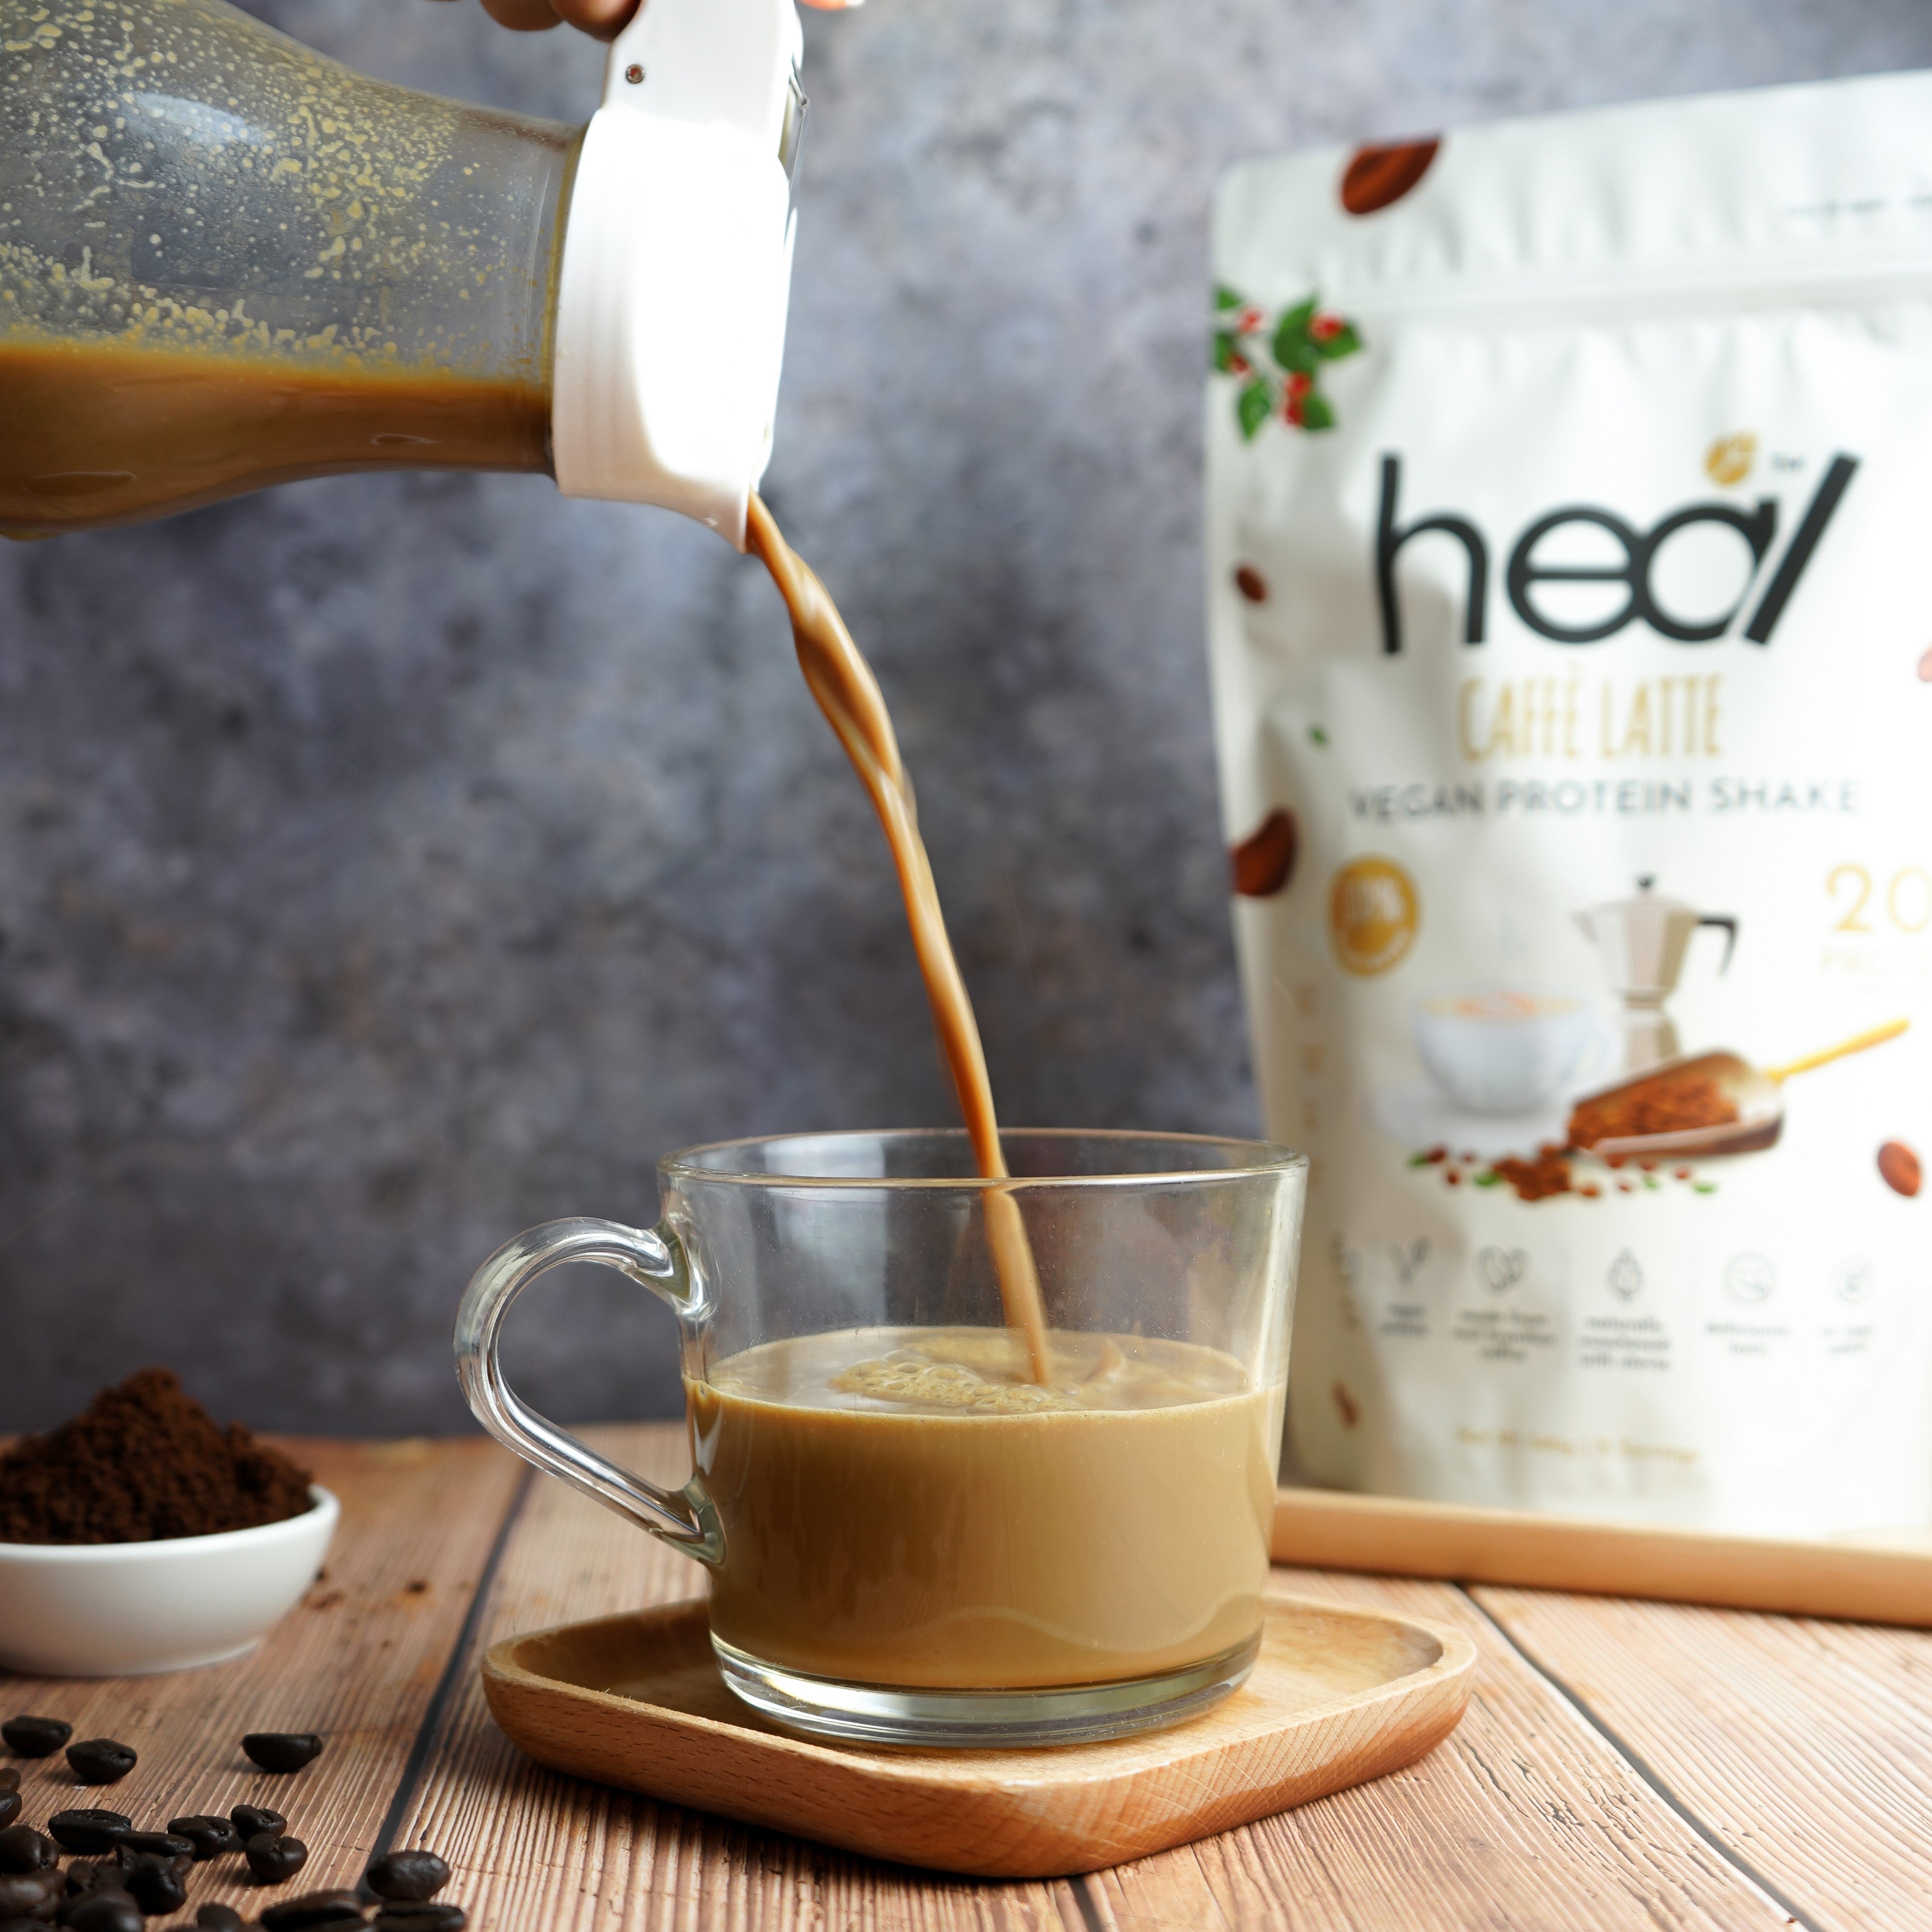 [Subscription Plan] Heal Caffe Latte Vegan Protein Shake, 15 Servings Value Pack